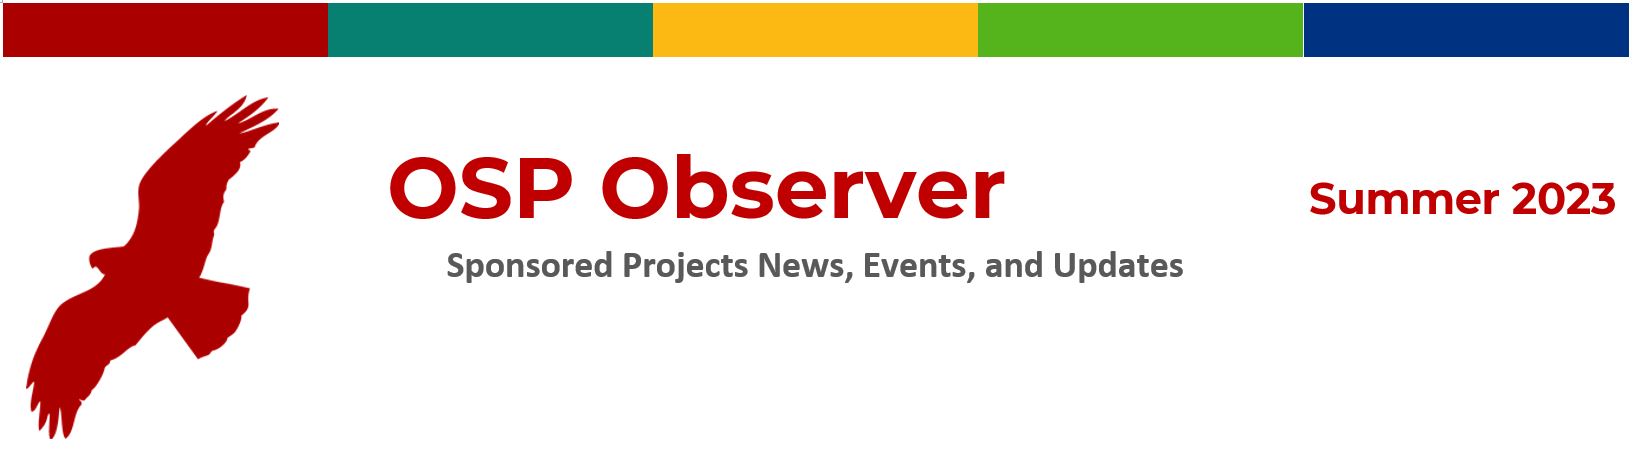 OSP Observer Summer 2023 header